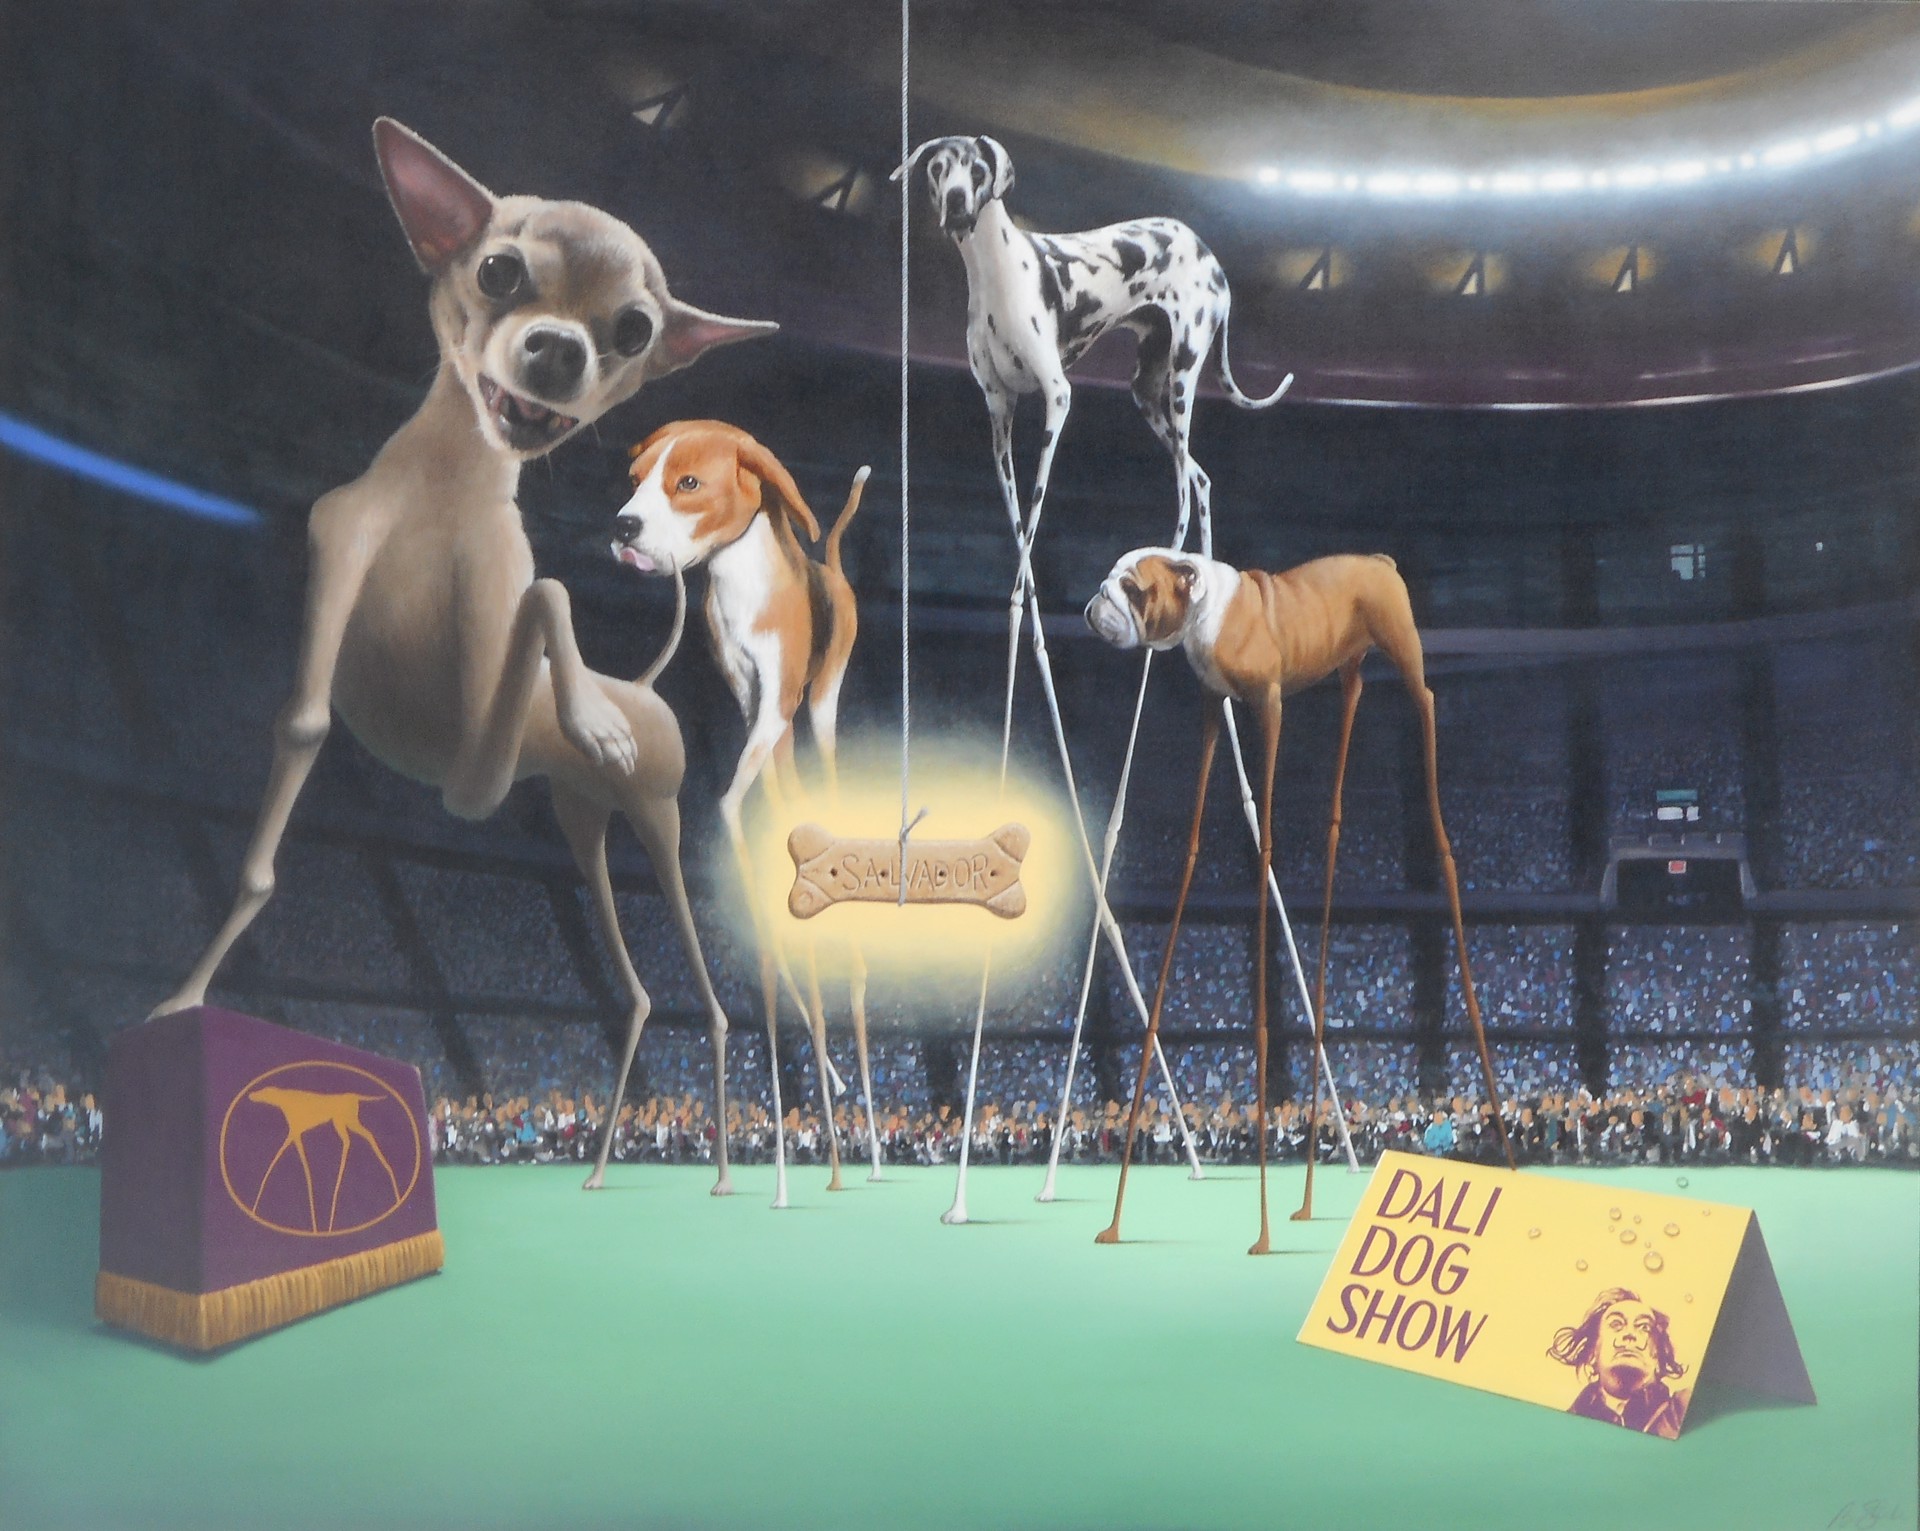 Dali Dog Show by BEN STEELE